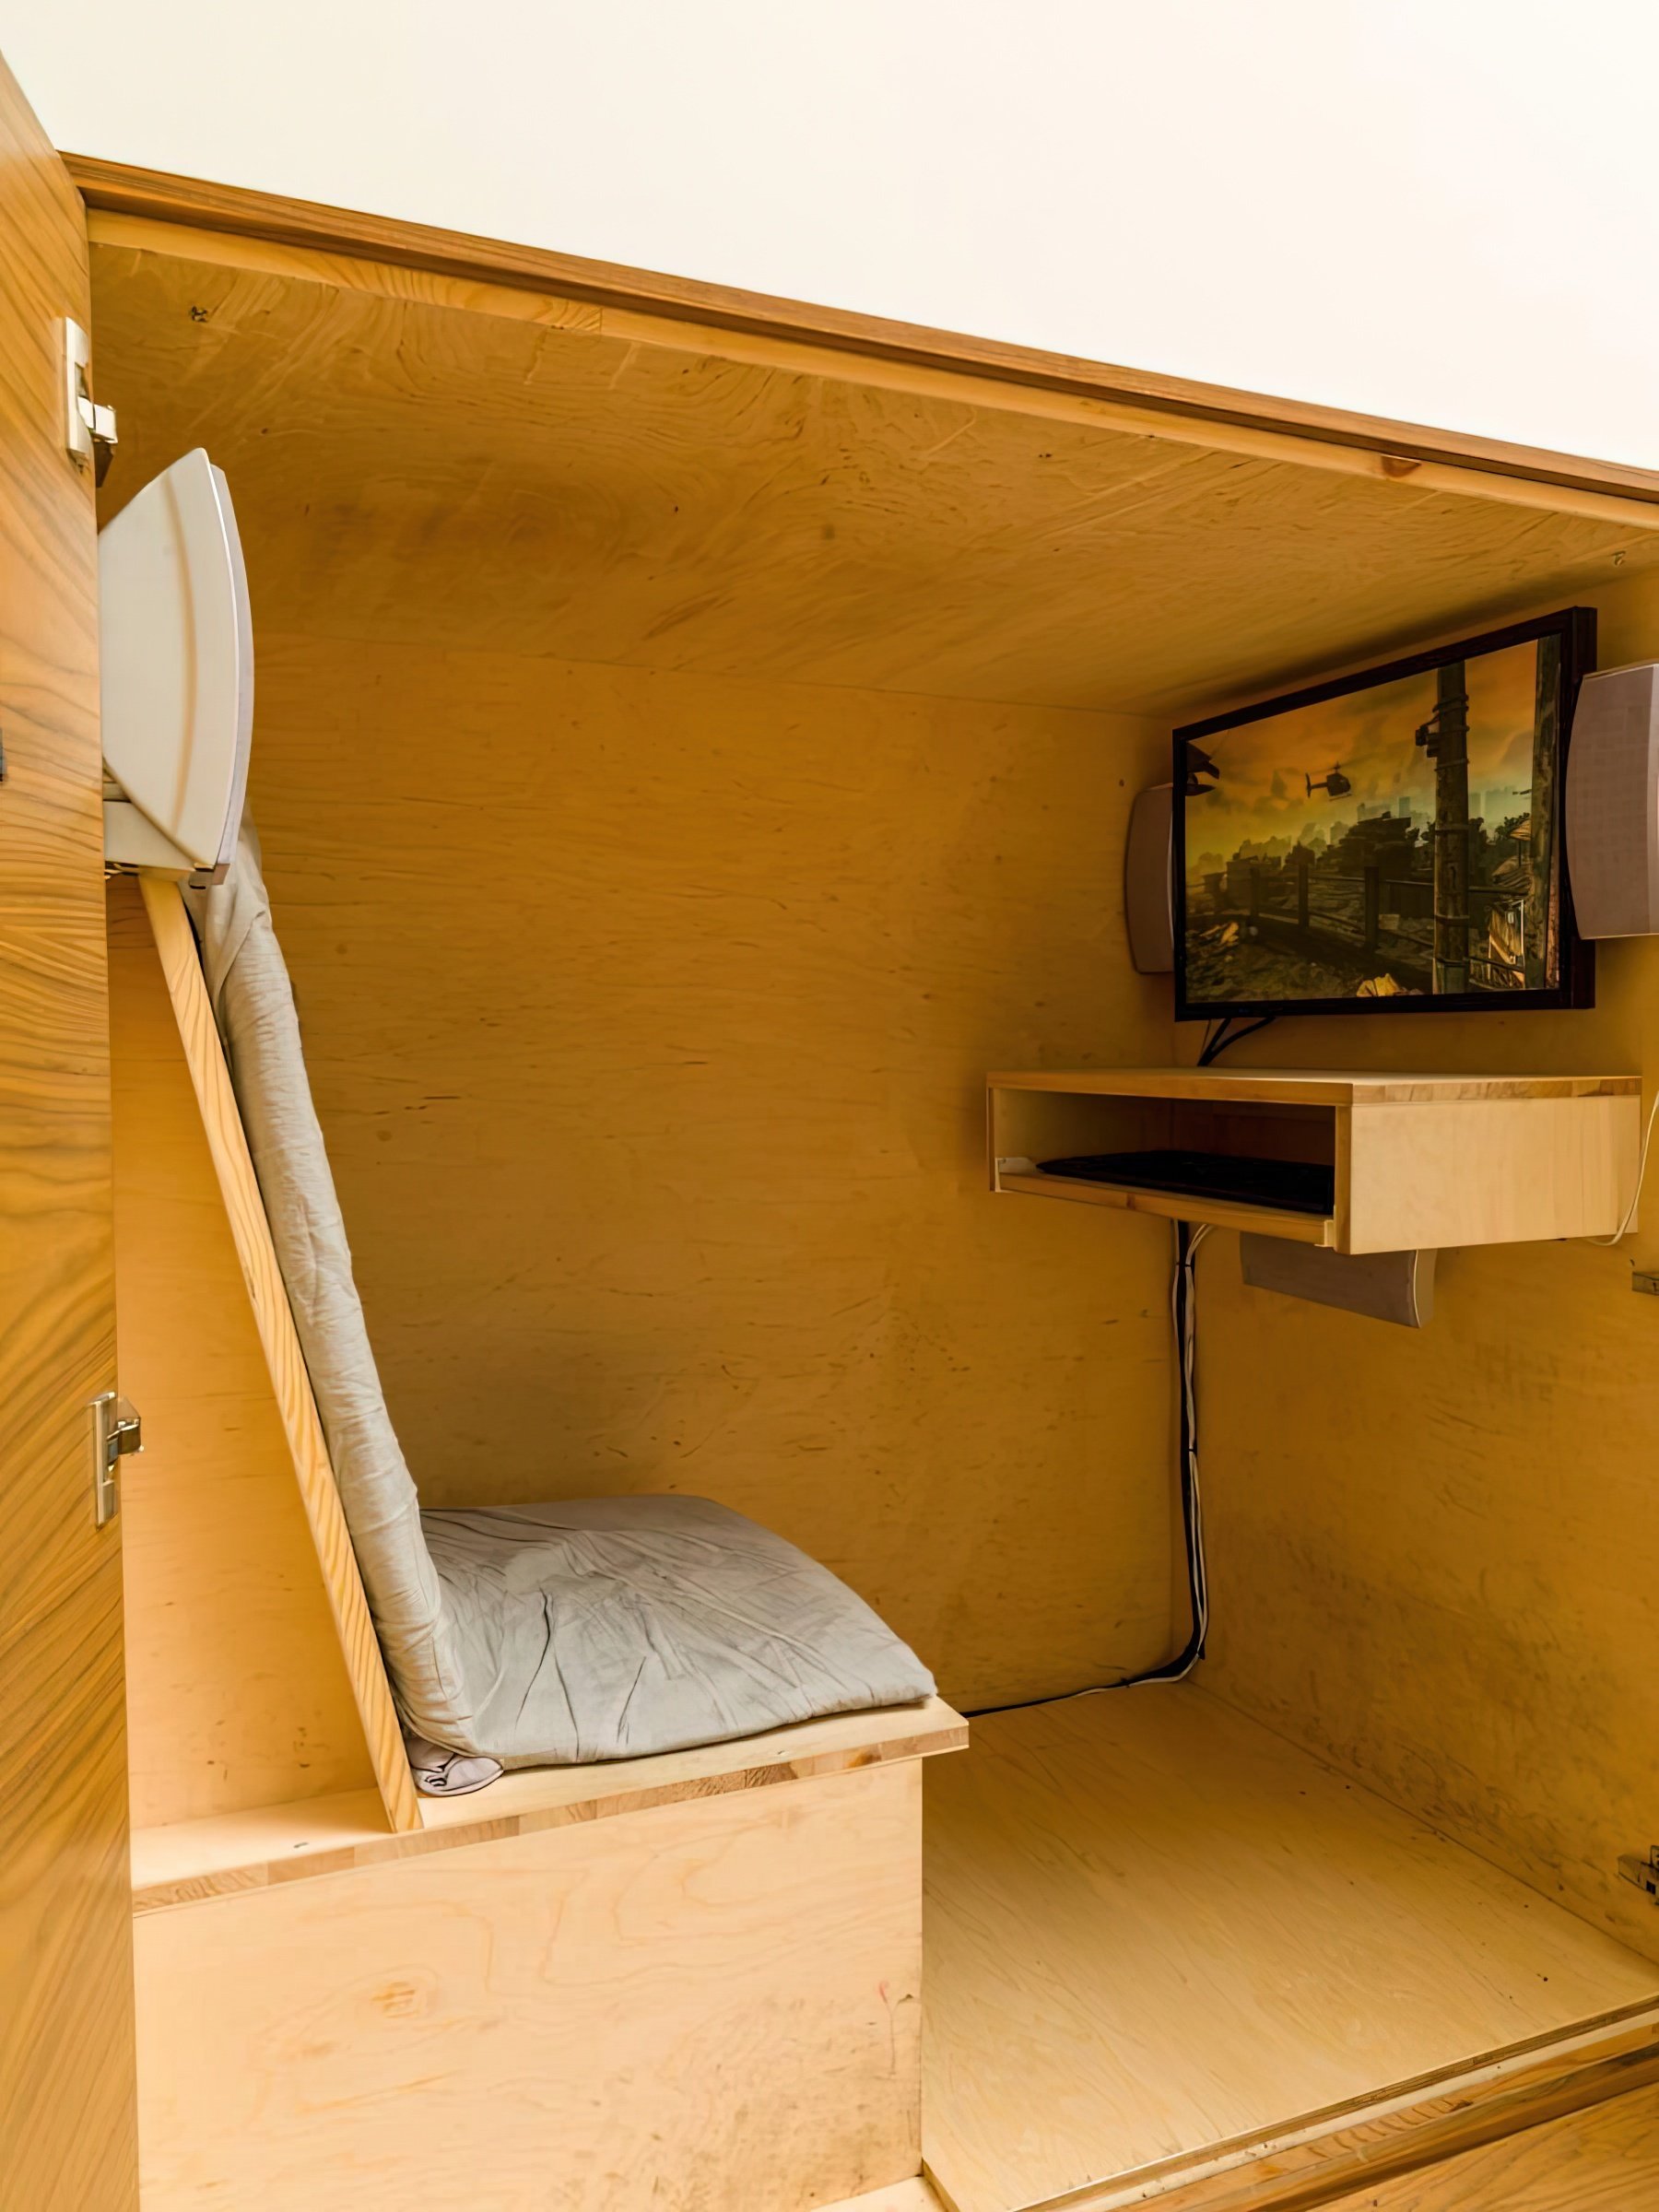  Jon Rafman,  A Man Digging , Cabinet, pillow, key board, digital video, 5.1 stereo, 2013  © Moderna Museet  